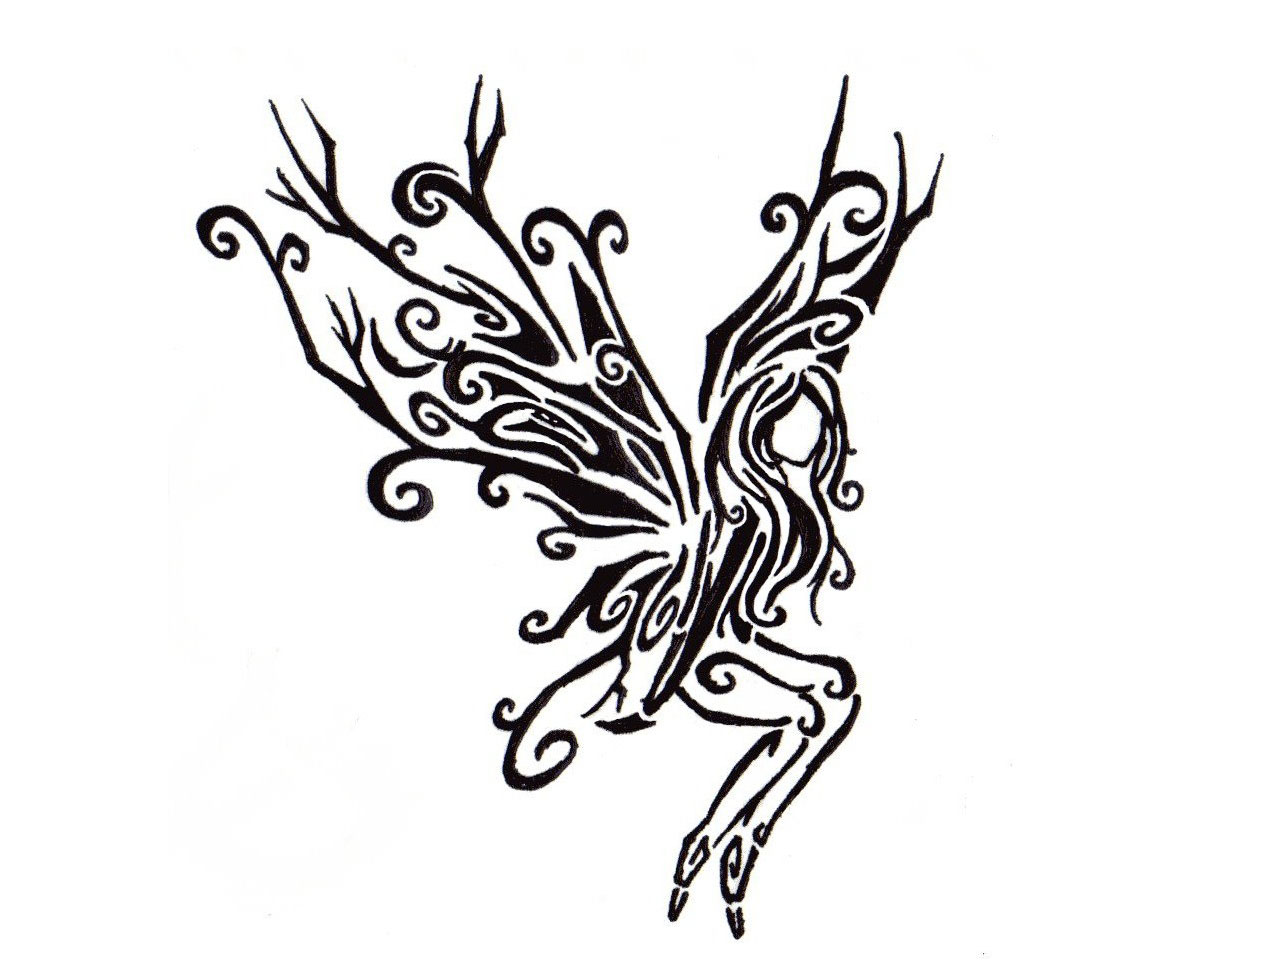 Moon tribal tattoo design 314 : Image Gallery 1254 | Amazing ...